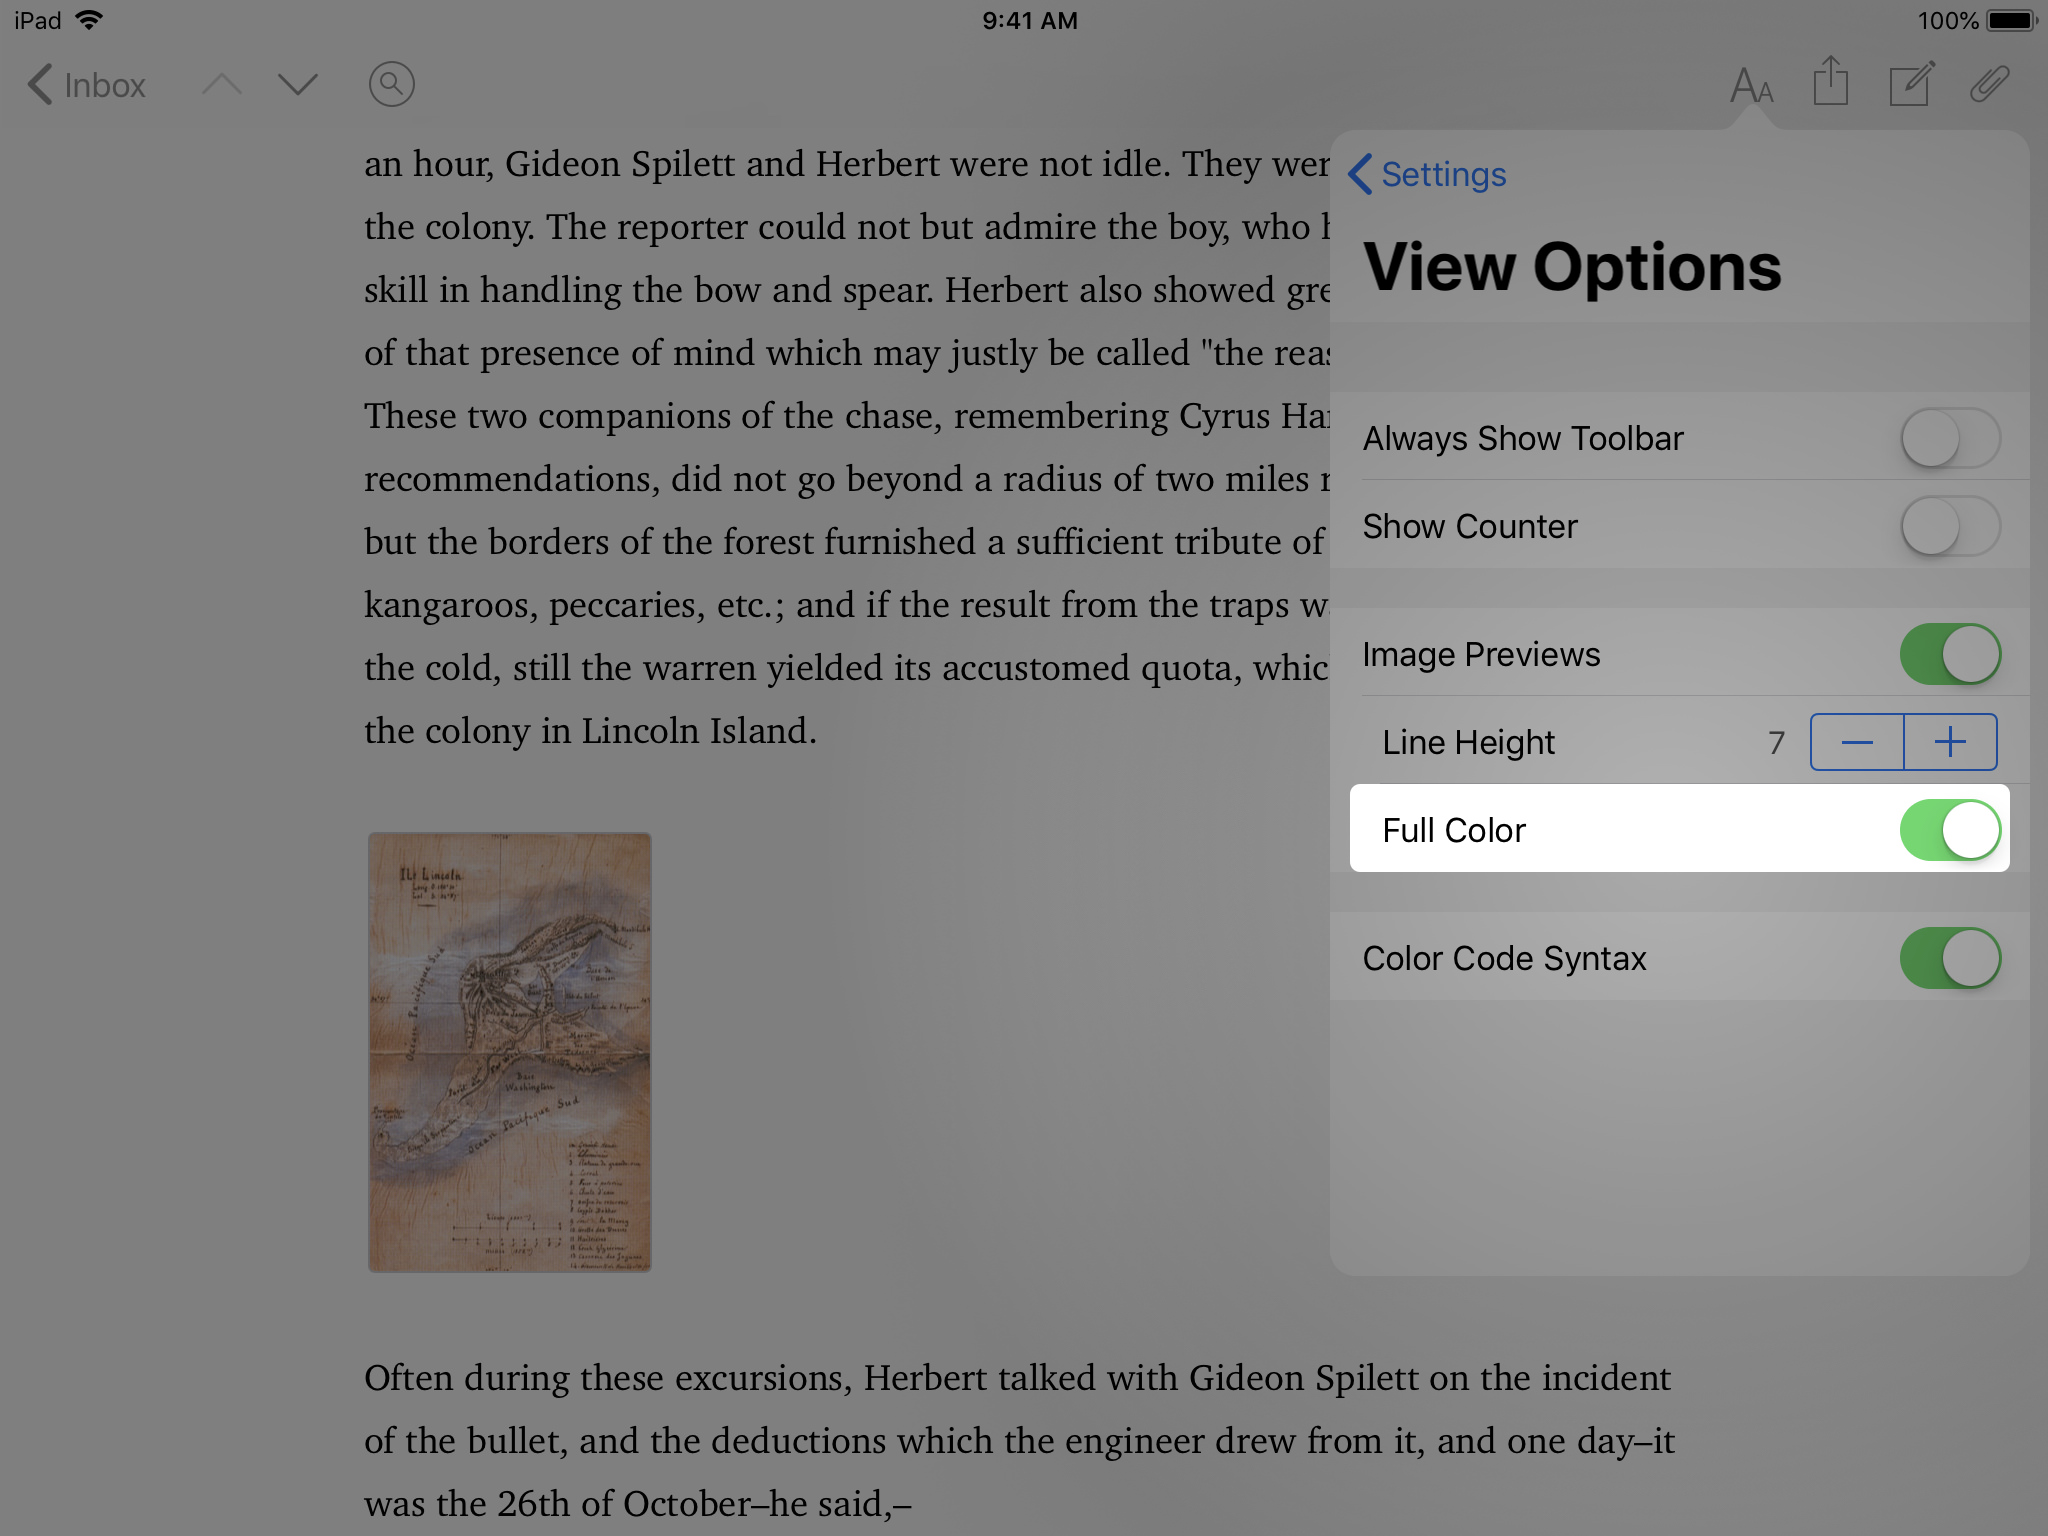 iPad Editor Setting > View Options